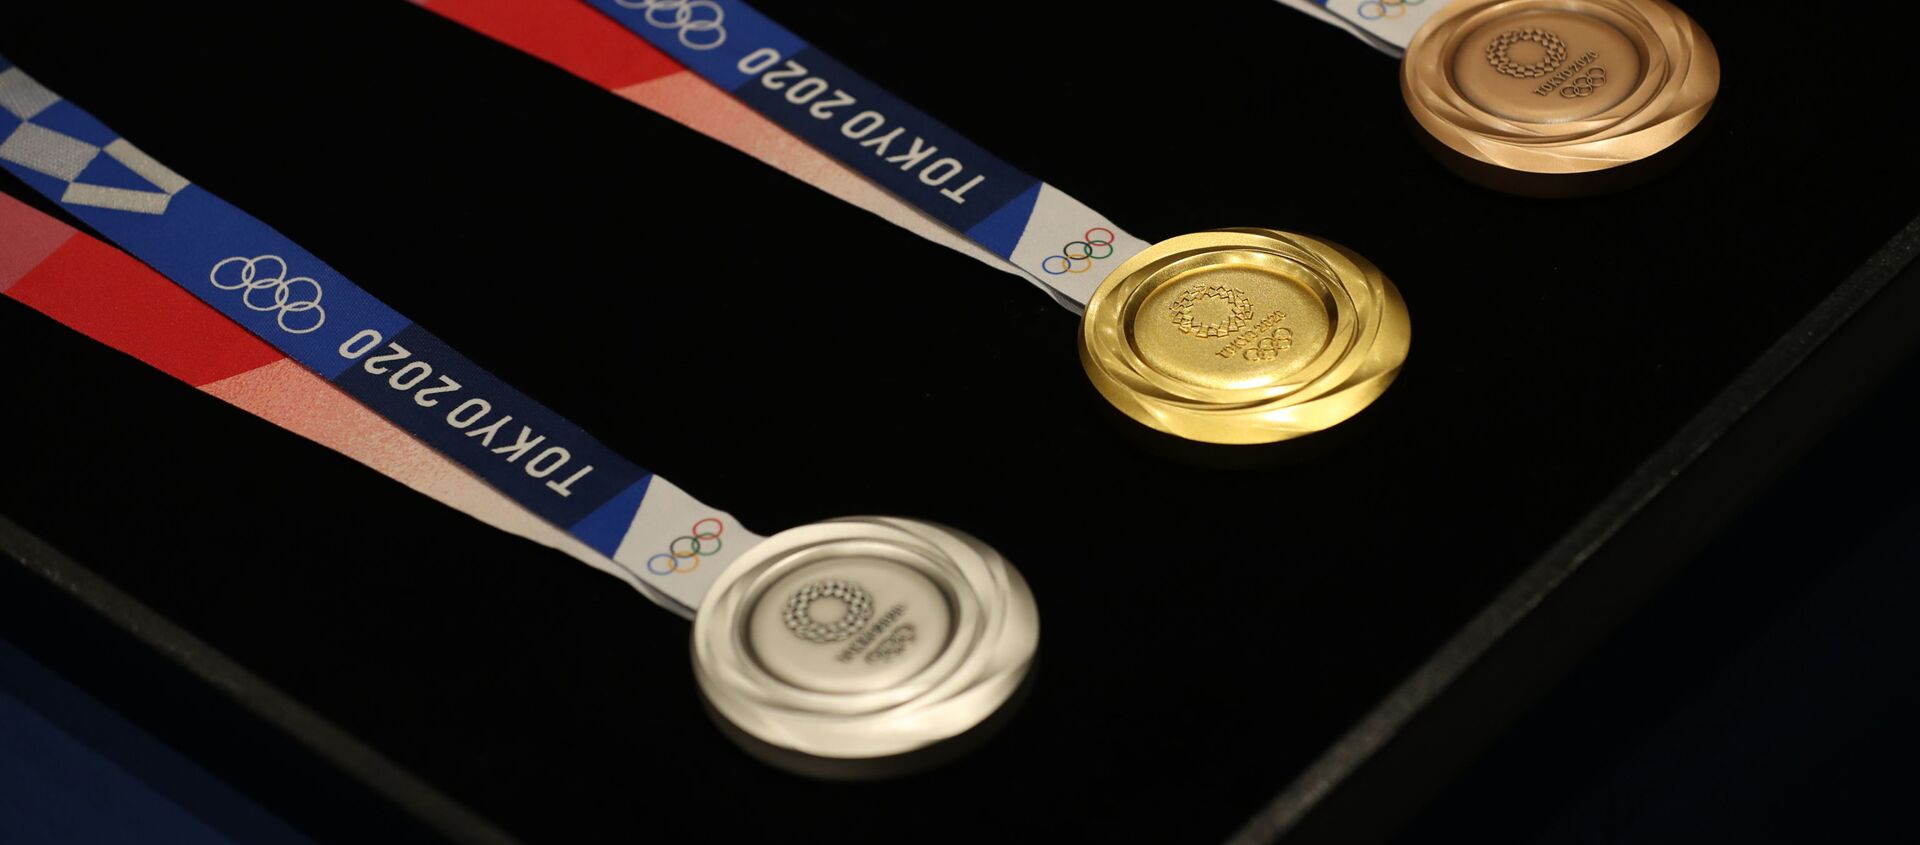 Олимпийские медали Токио-2020 - Sputnik Беларусь, 1920, 04.02.2021